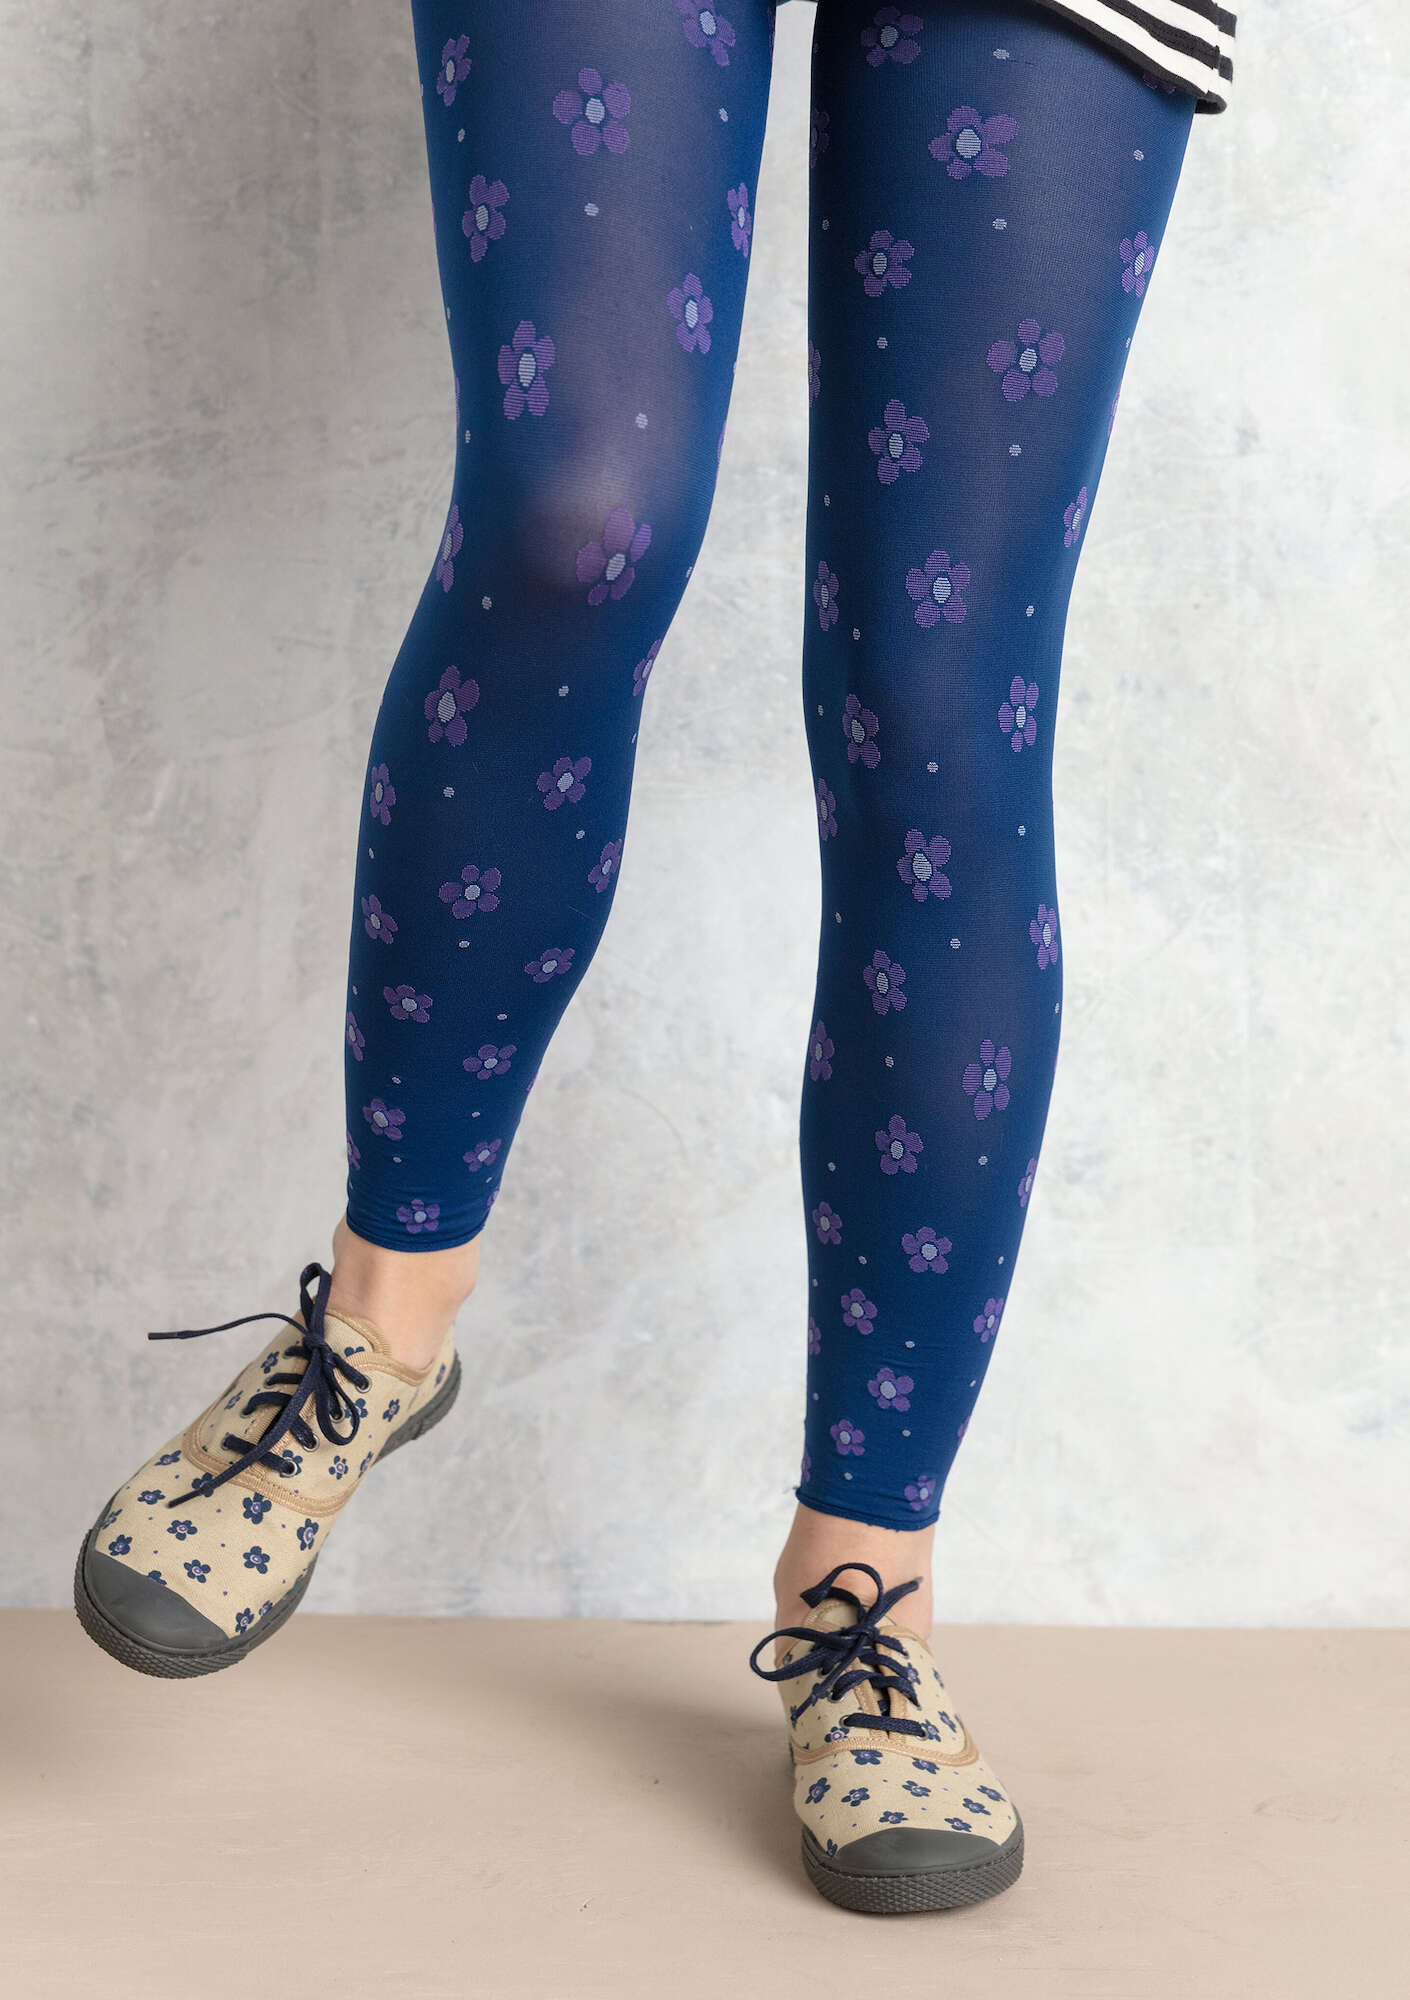 “Belle” jacquard-patterned leggings in recycled nylon indigo